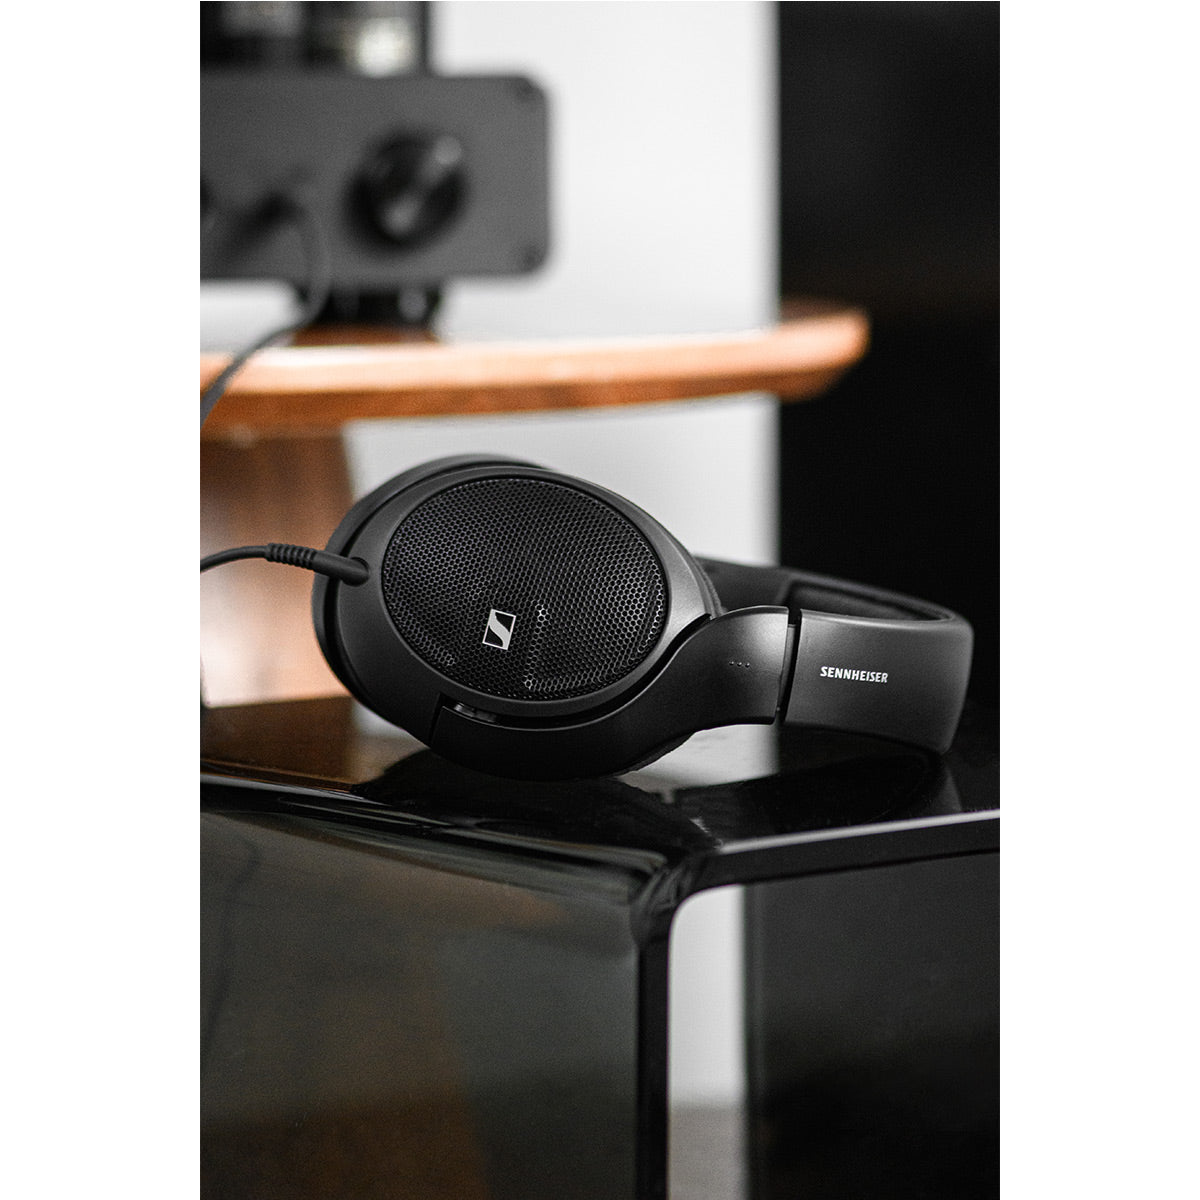 Sennheiser HD 560S Over Ear Headphones Review